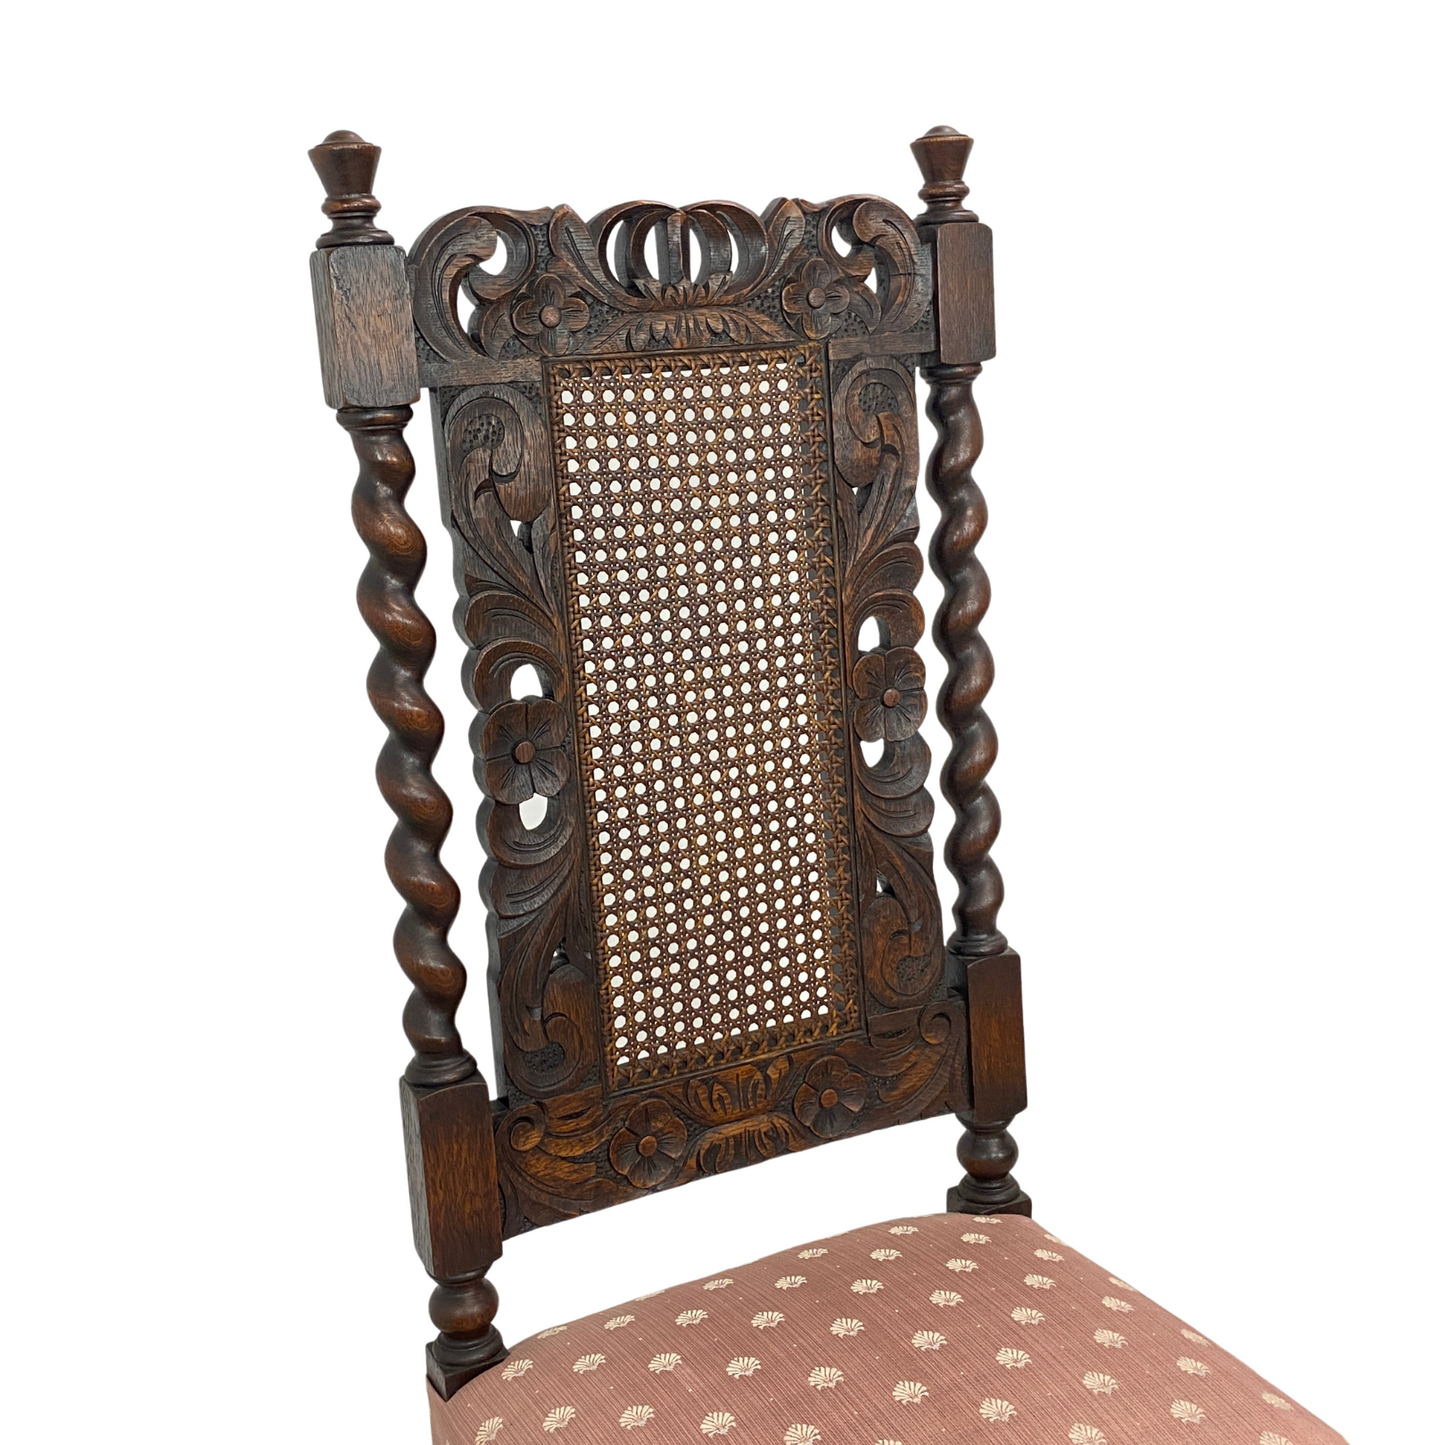 Antique Jacobean Barley Twist Carved Throne Chair